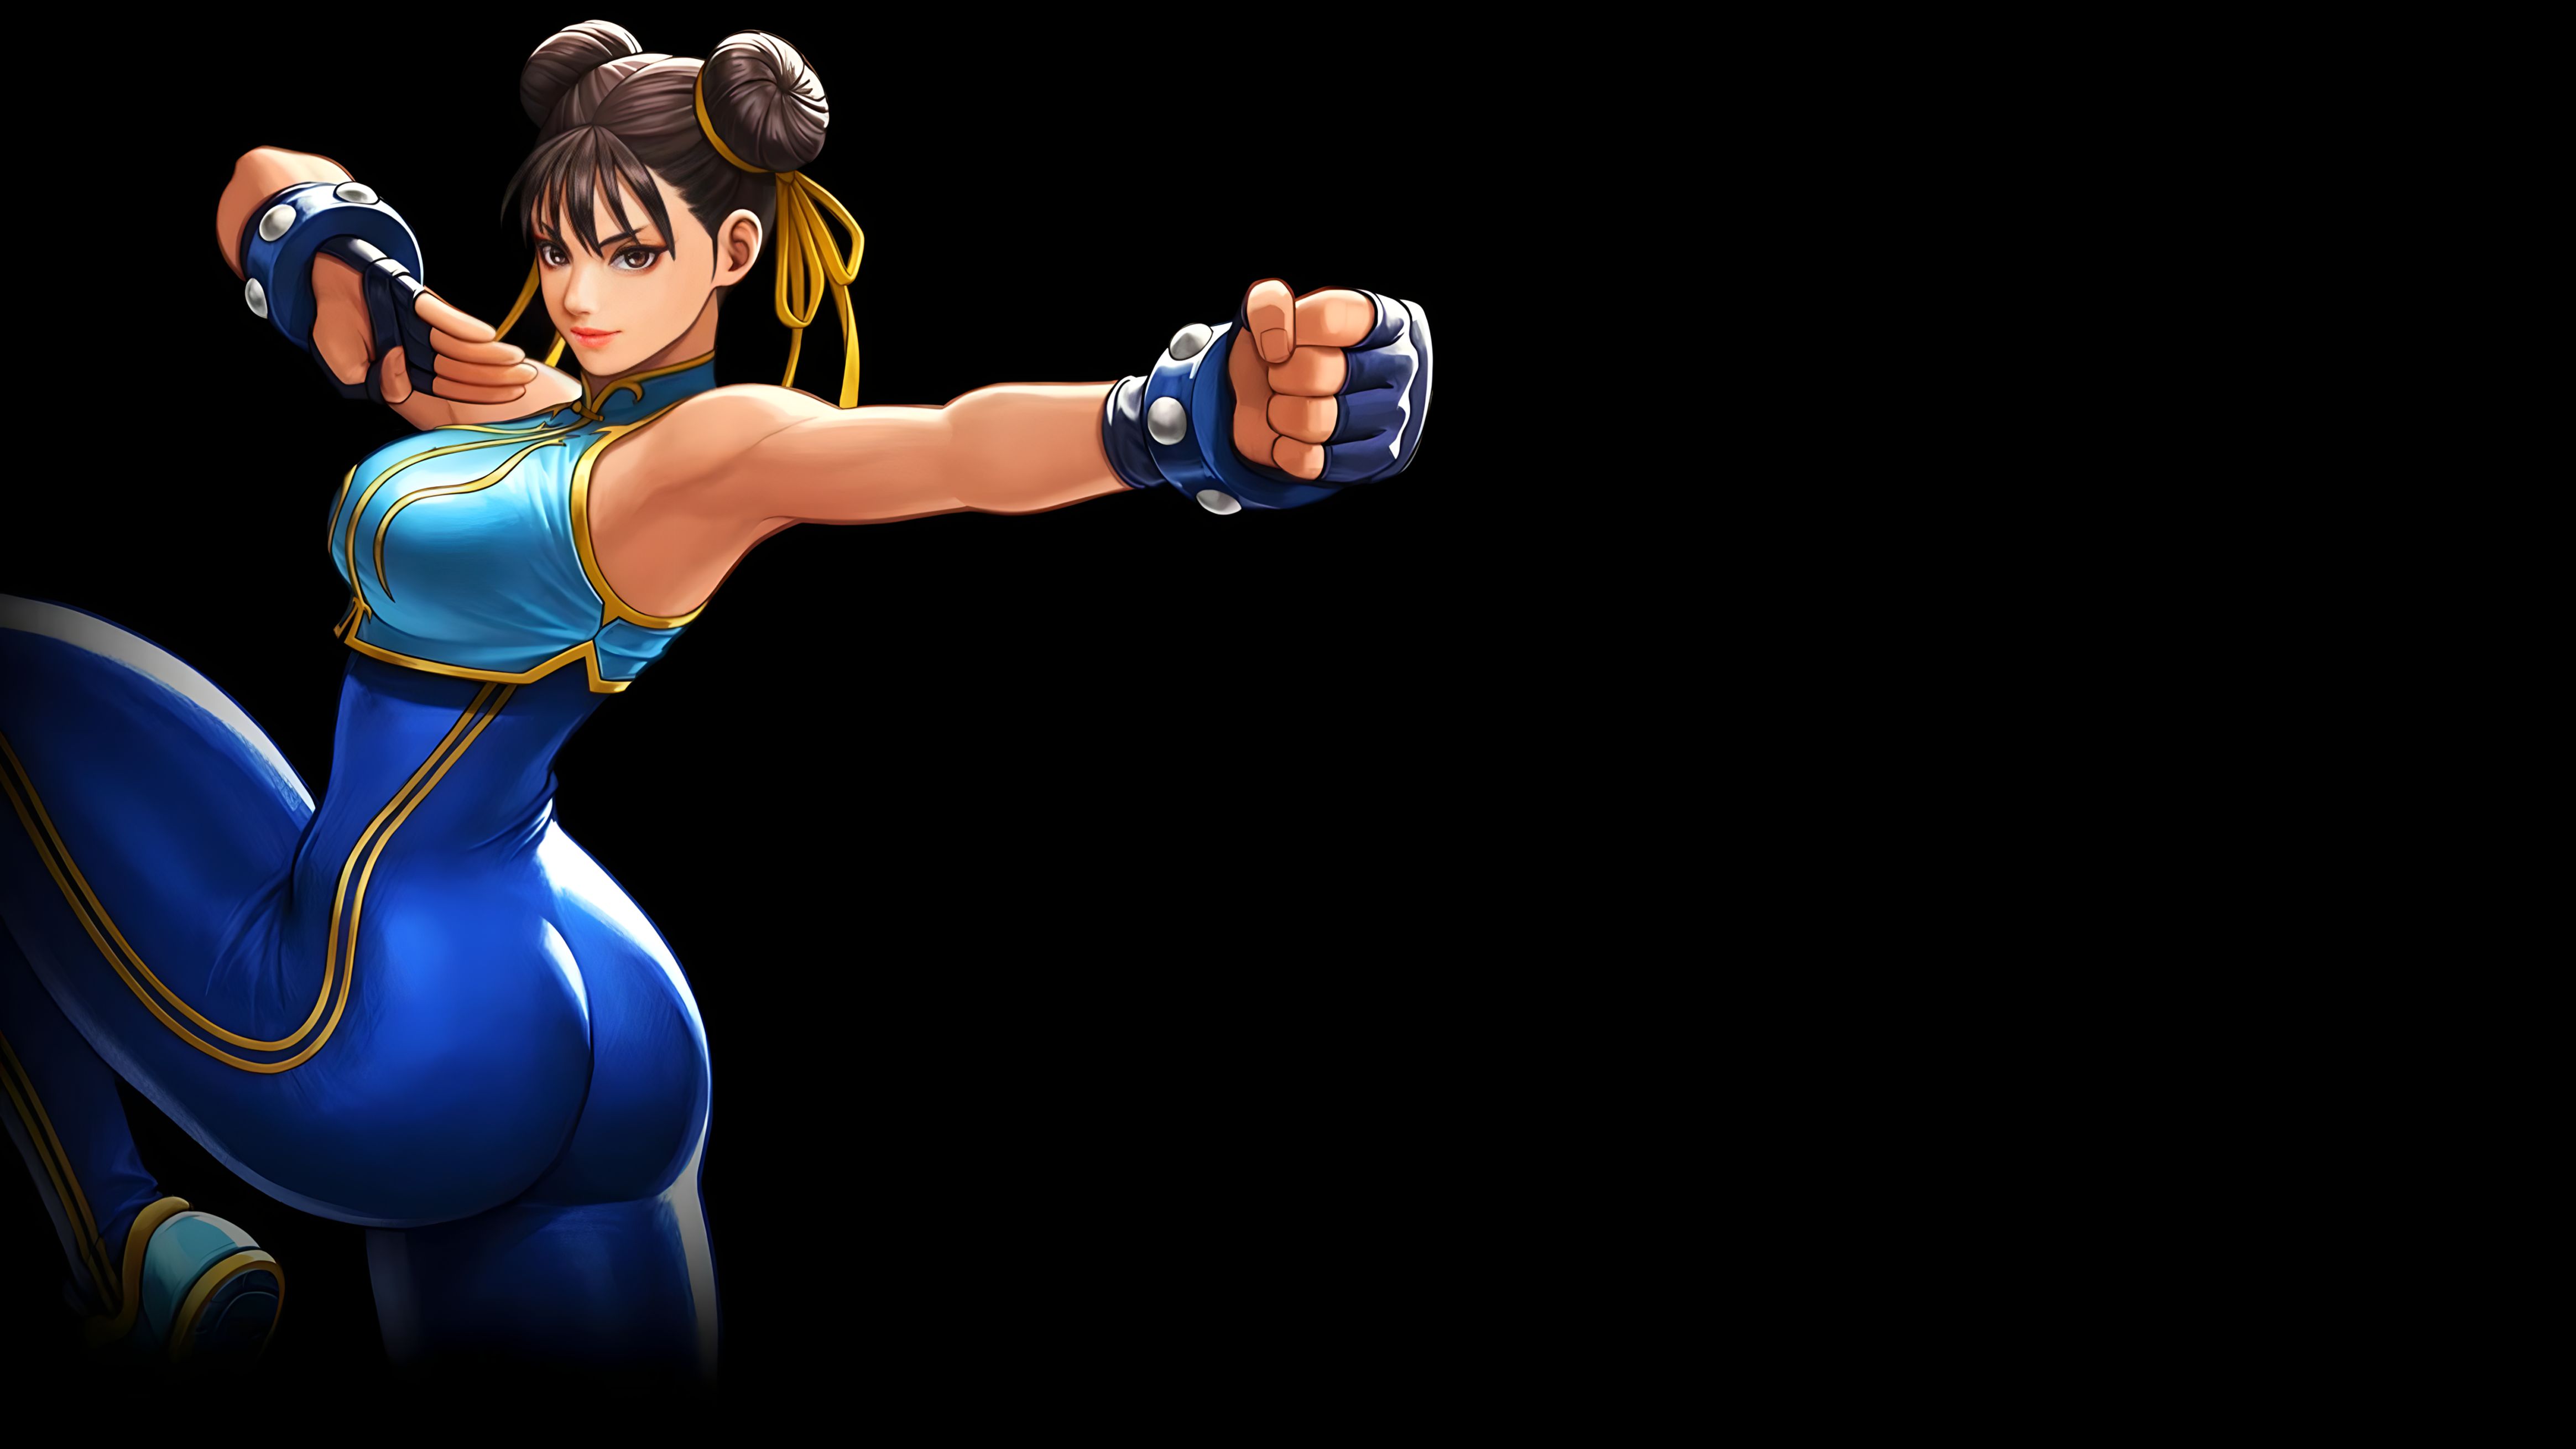 Chun Li Street Fighter Fighting Games Blue Clothing Video Games Digital Art Simple Background 4658x2620